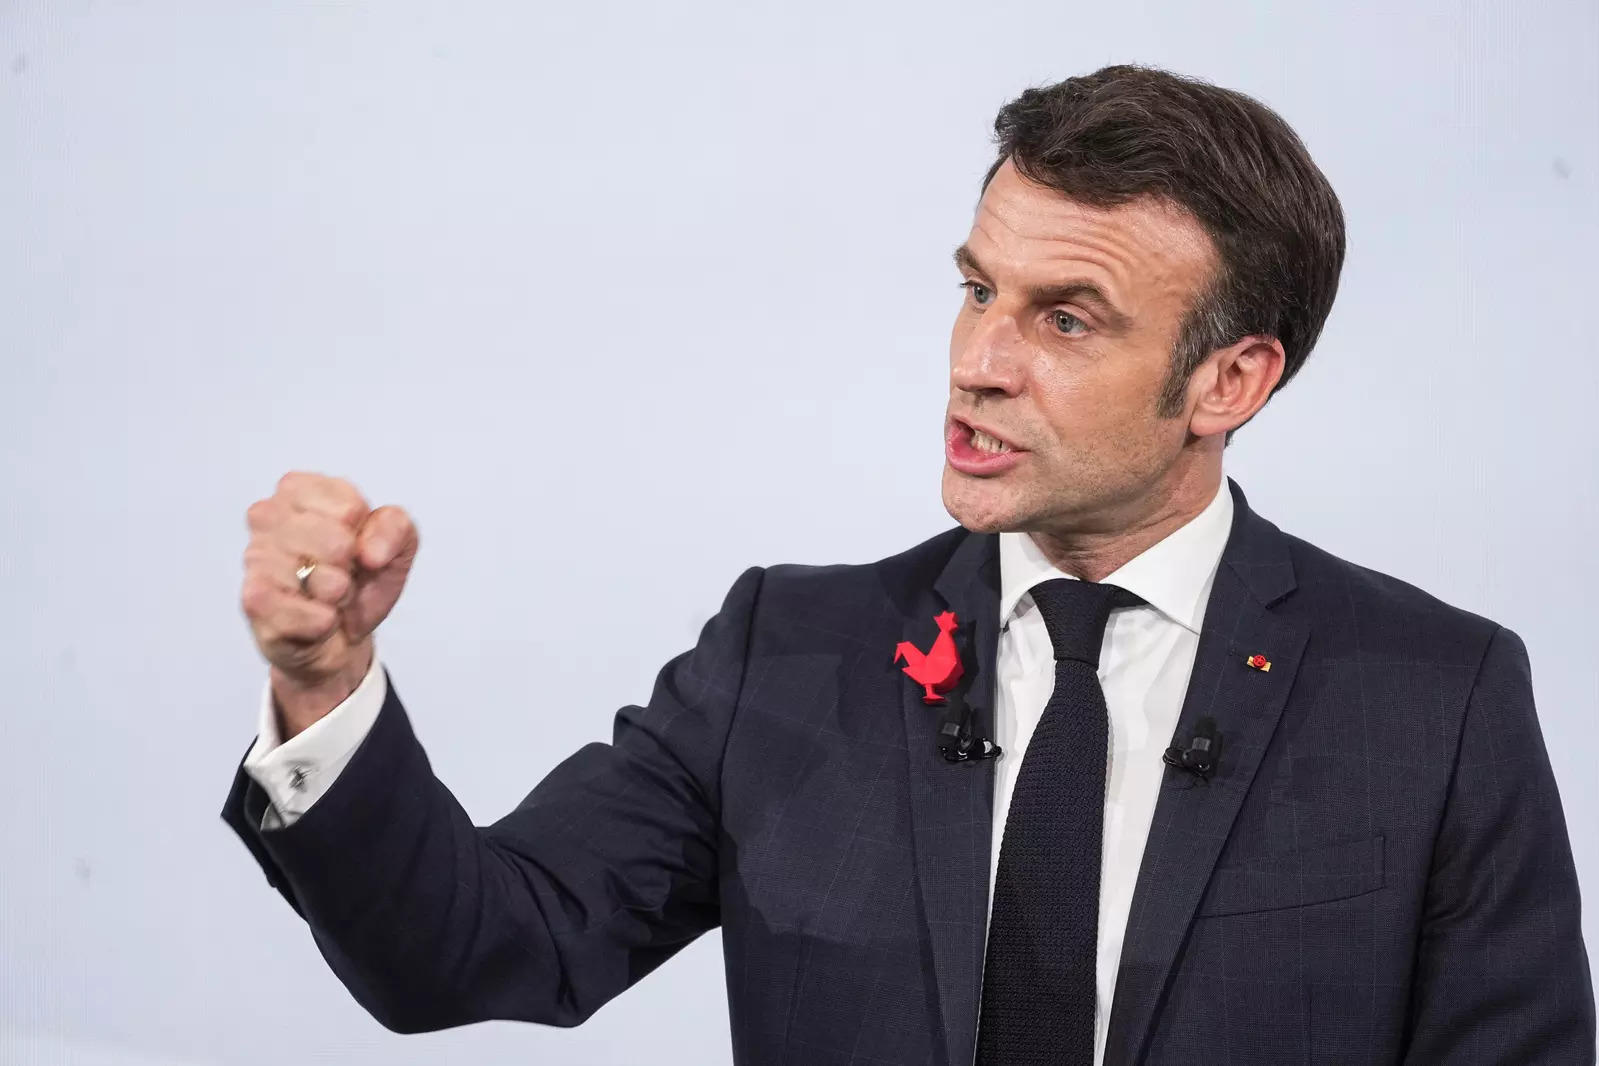 Macron to speak as anger smoulders over pension reform